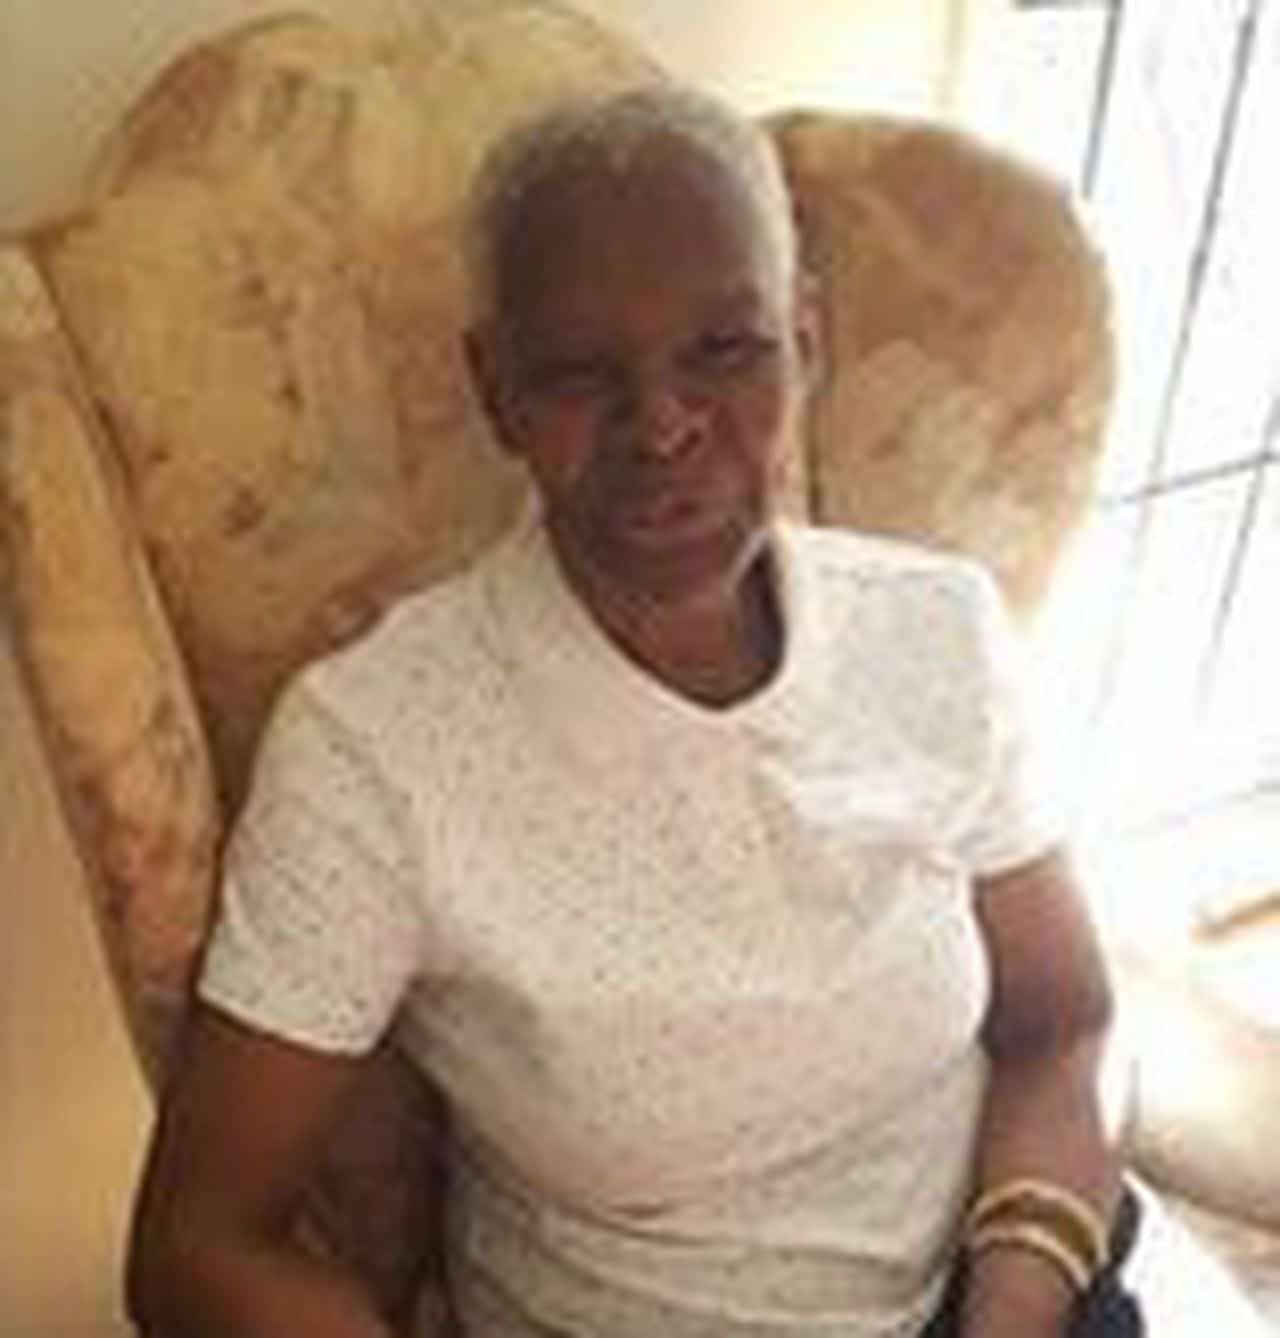 Missing elderly woman with dementia found safe